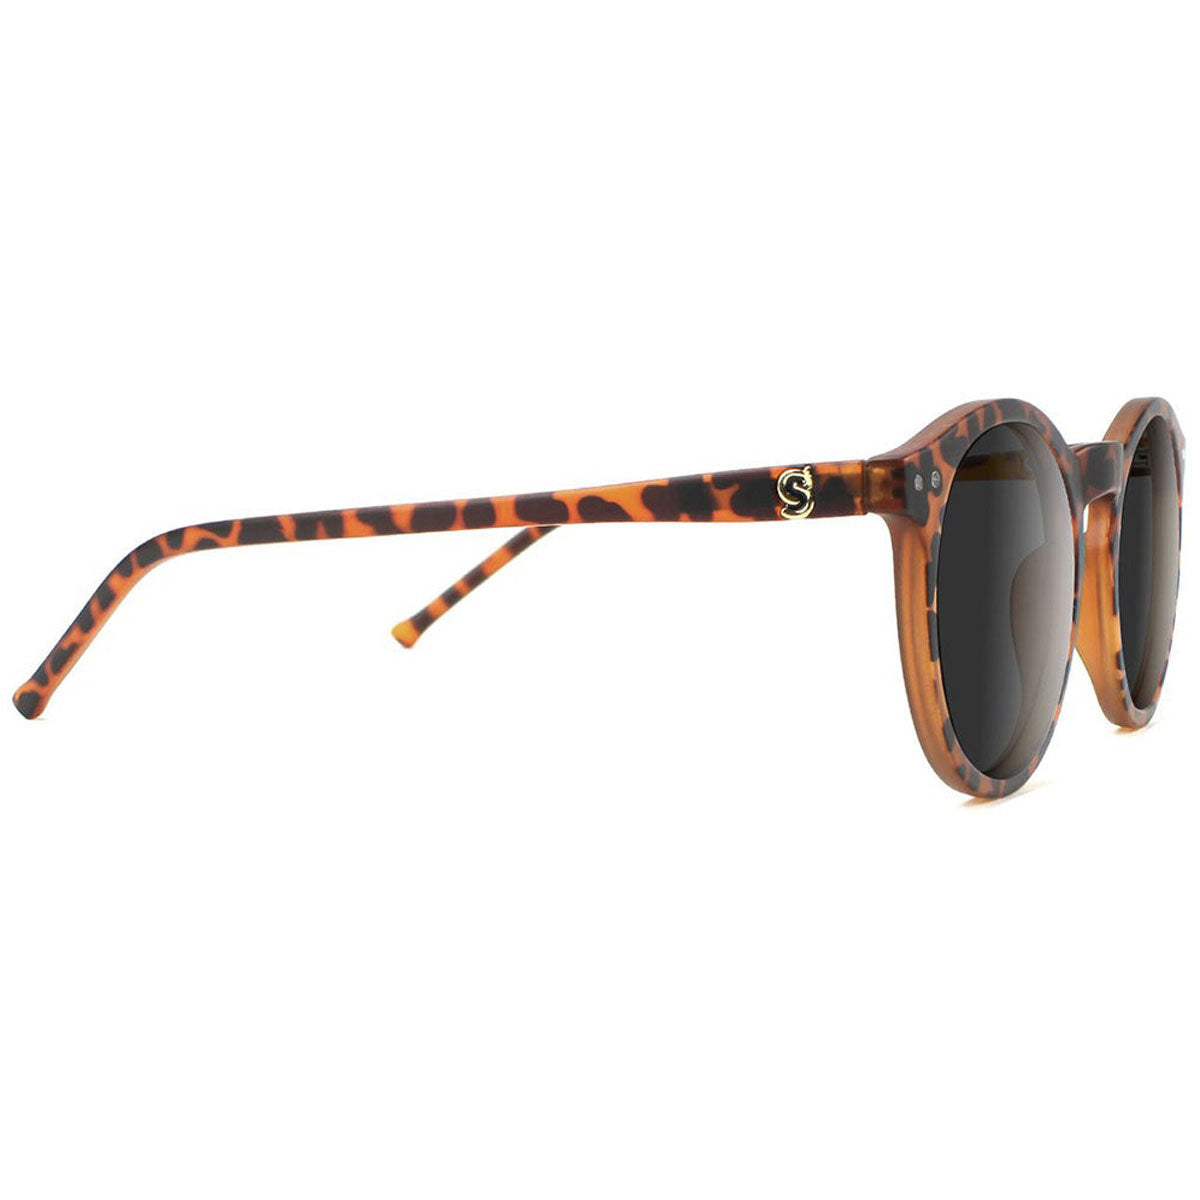 Glassy Apollo Premium Polarized Sunglasses - Matte Tortoise image 3